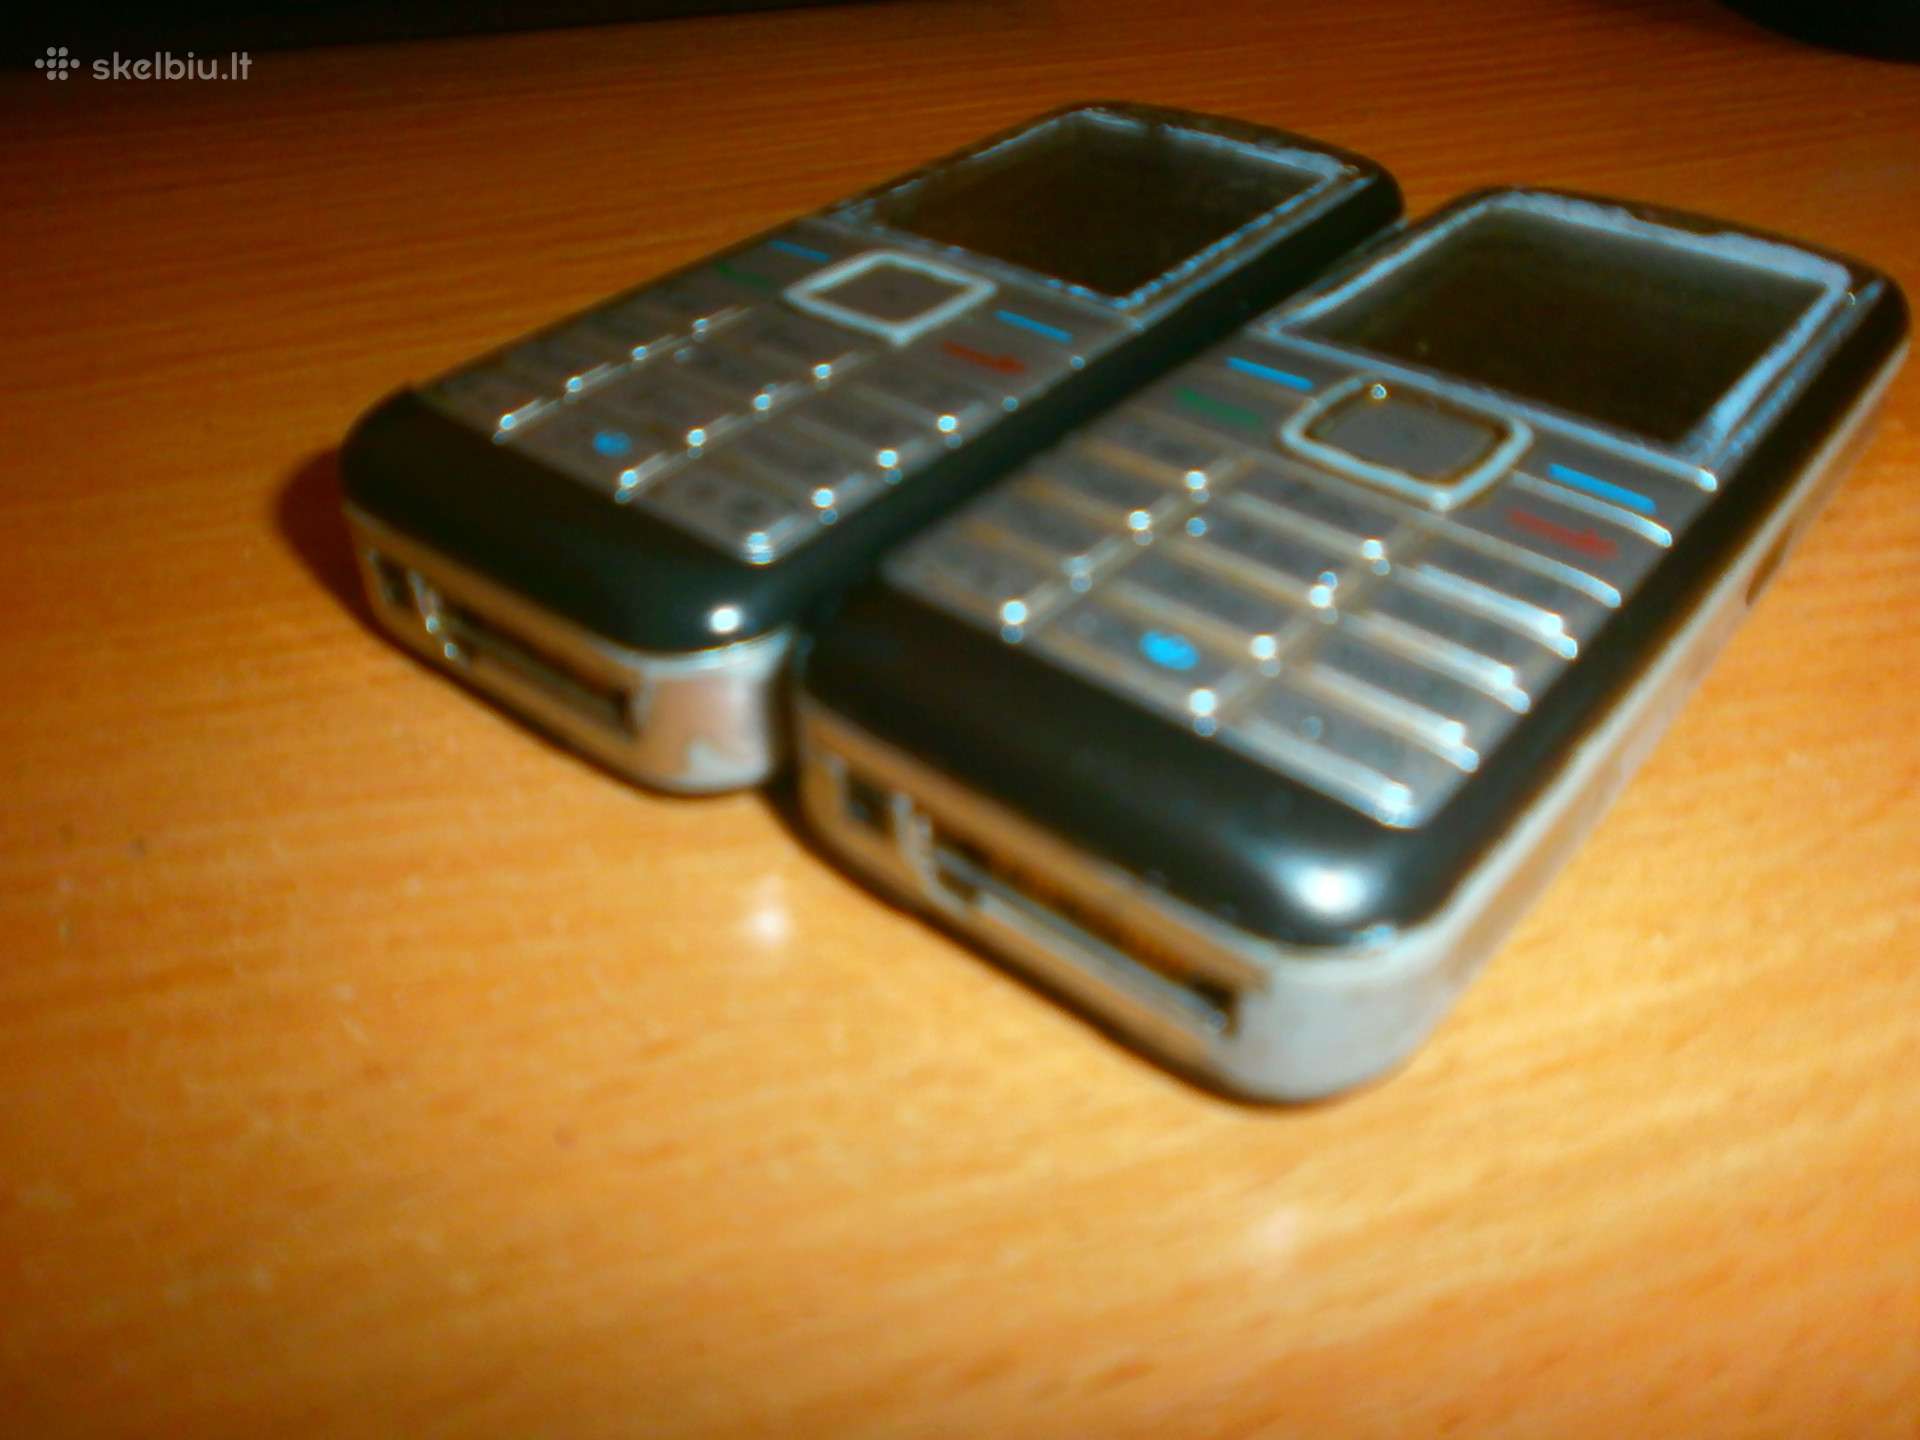 Nokia 6070 - Skelbiu.lt